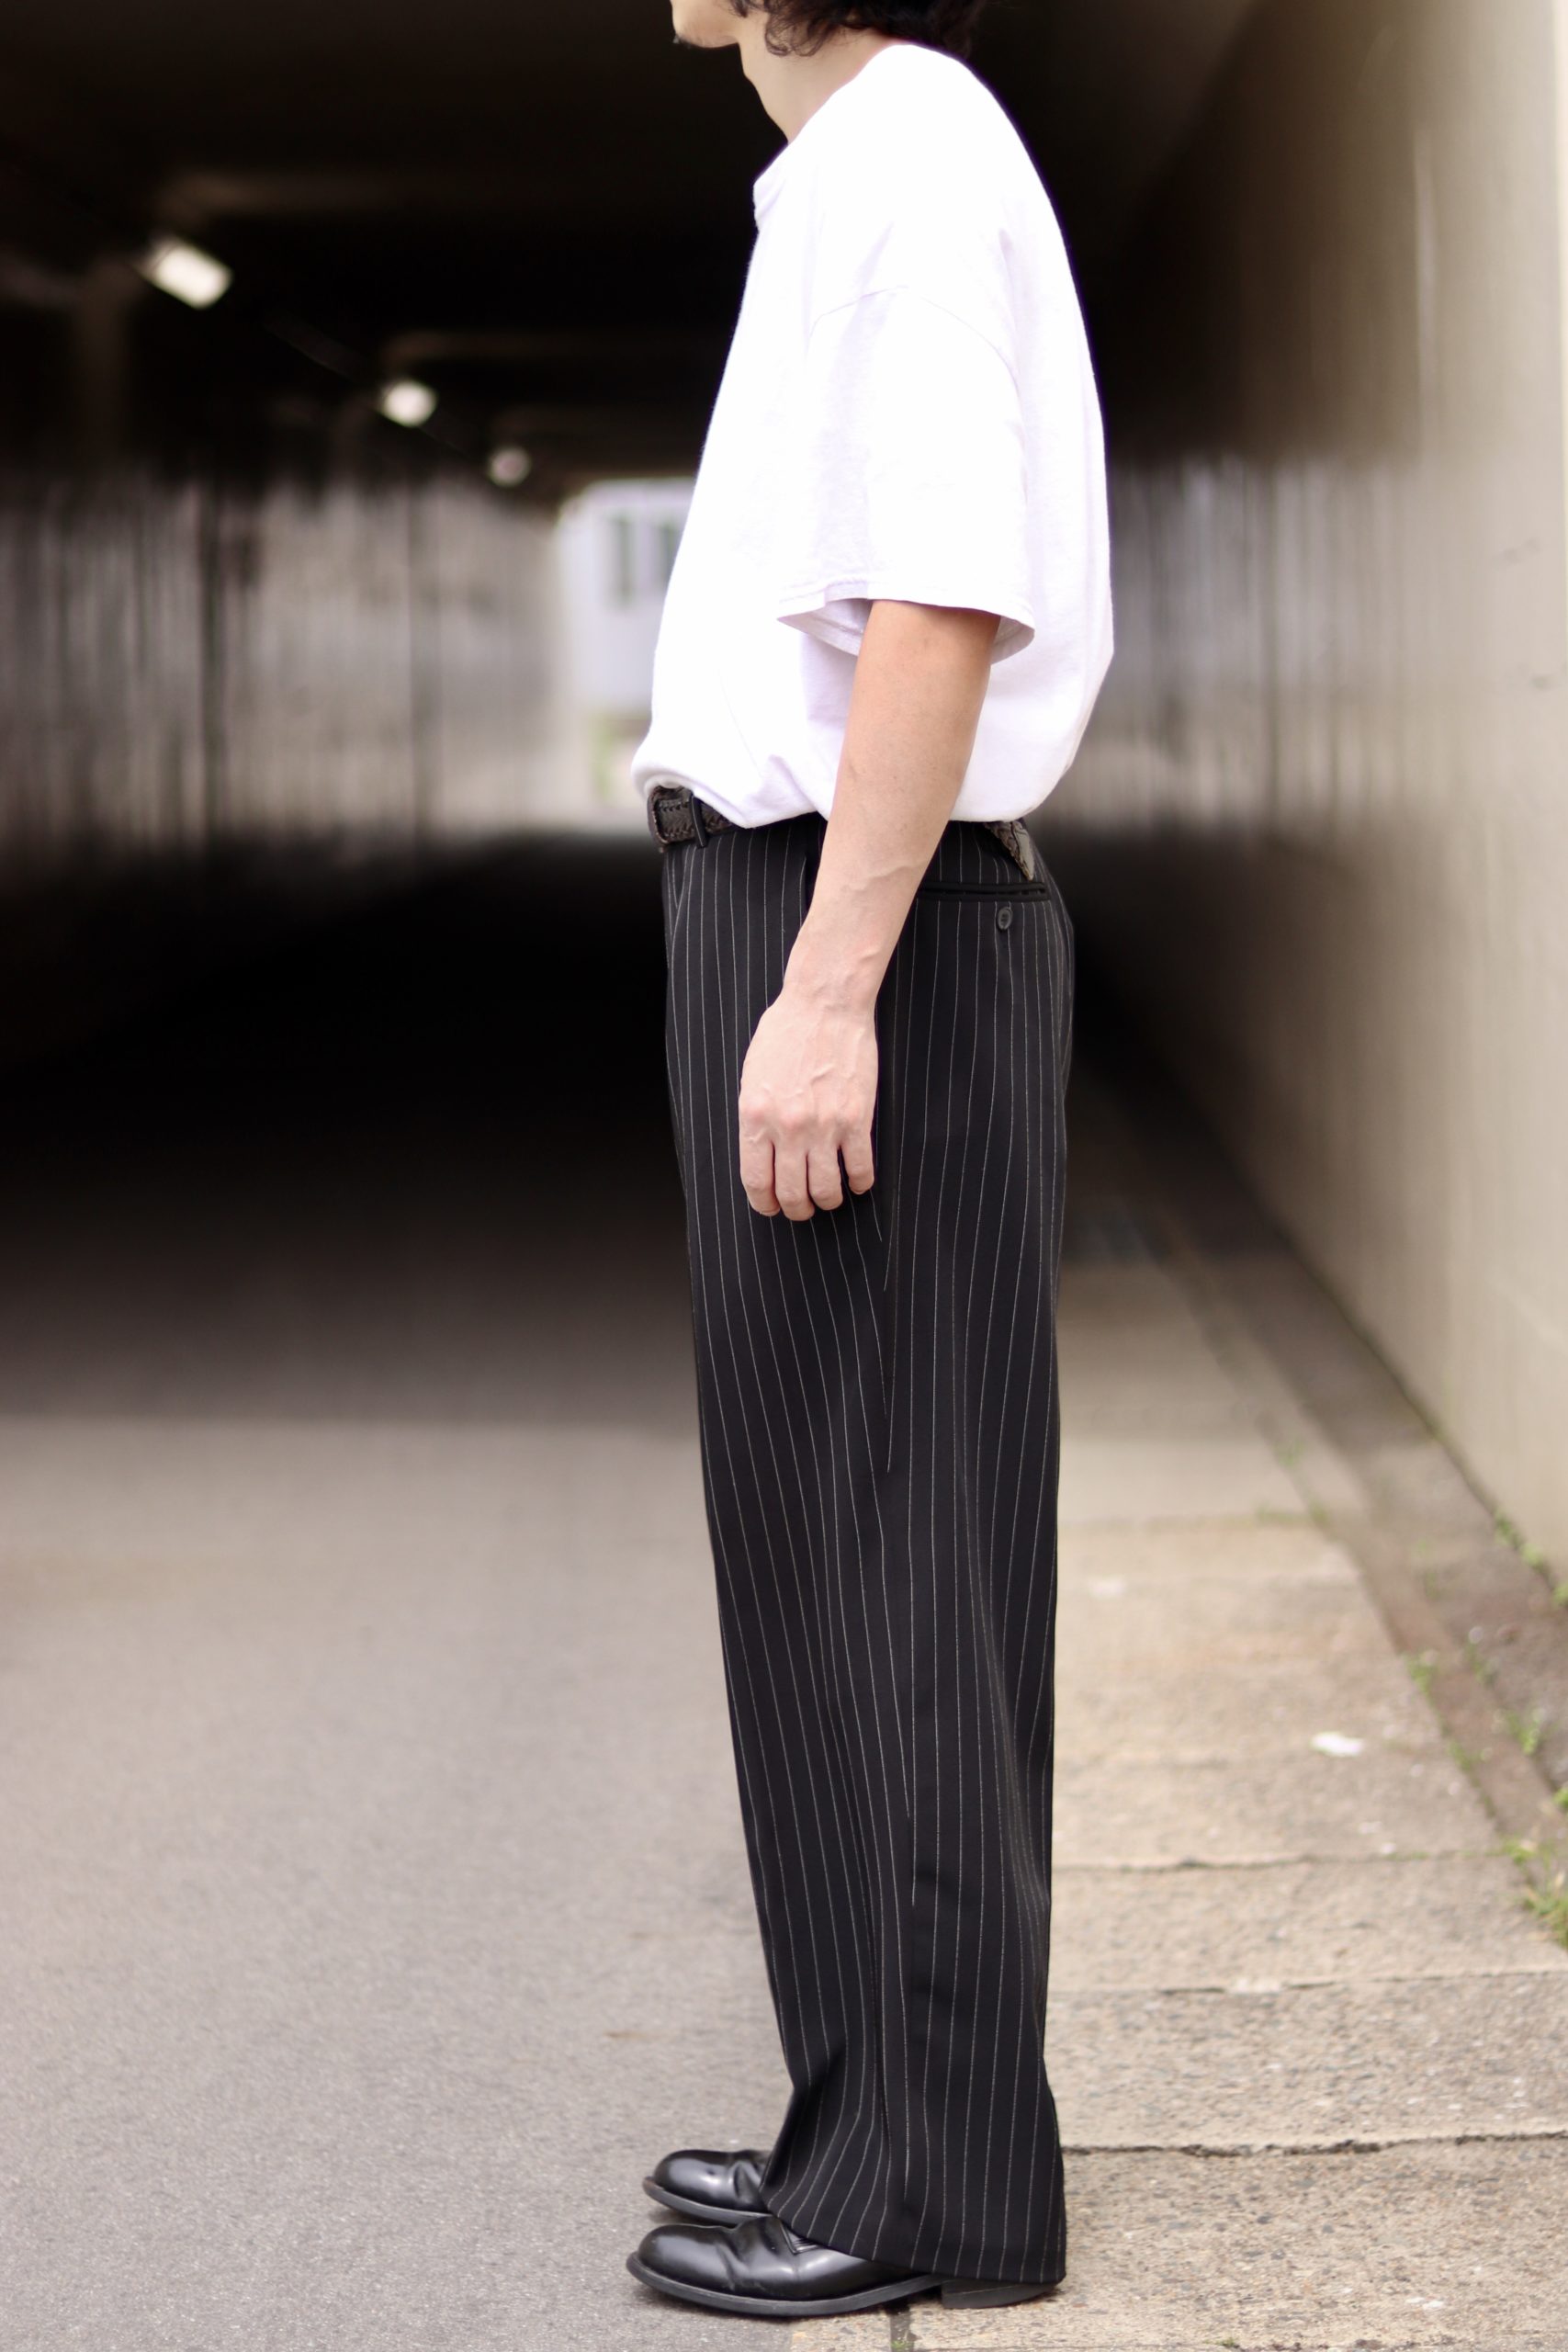 Slacks Pants (Black Pin Stripe , 80-90's)